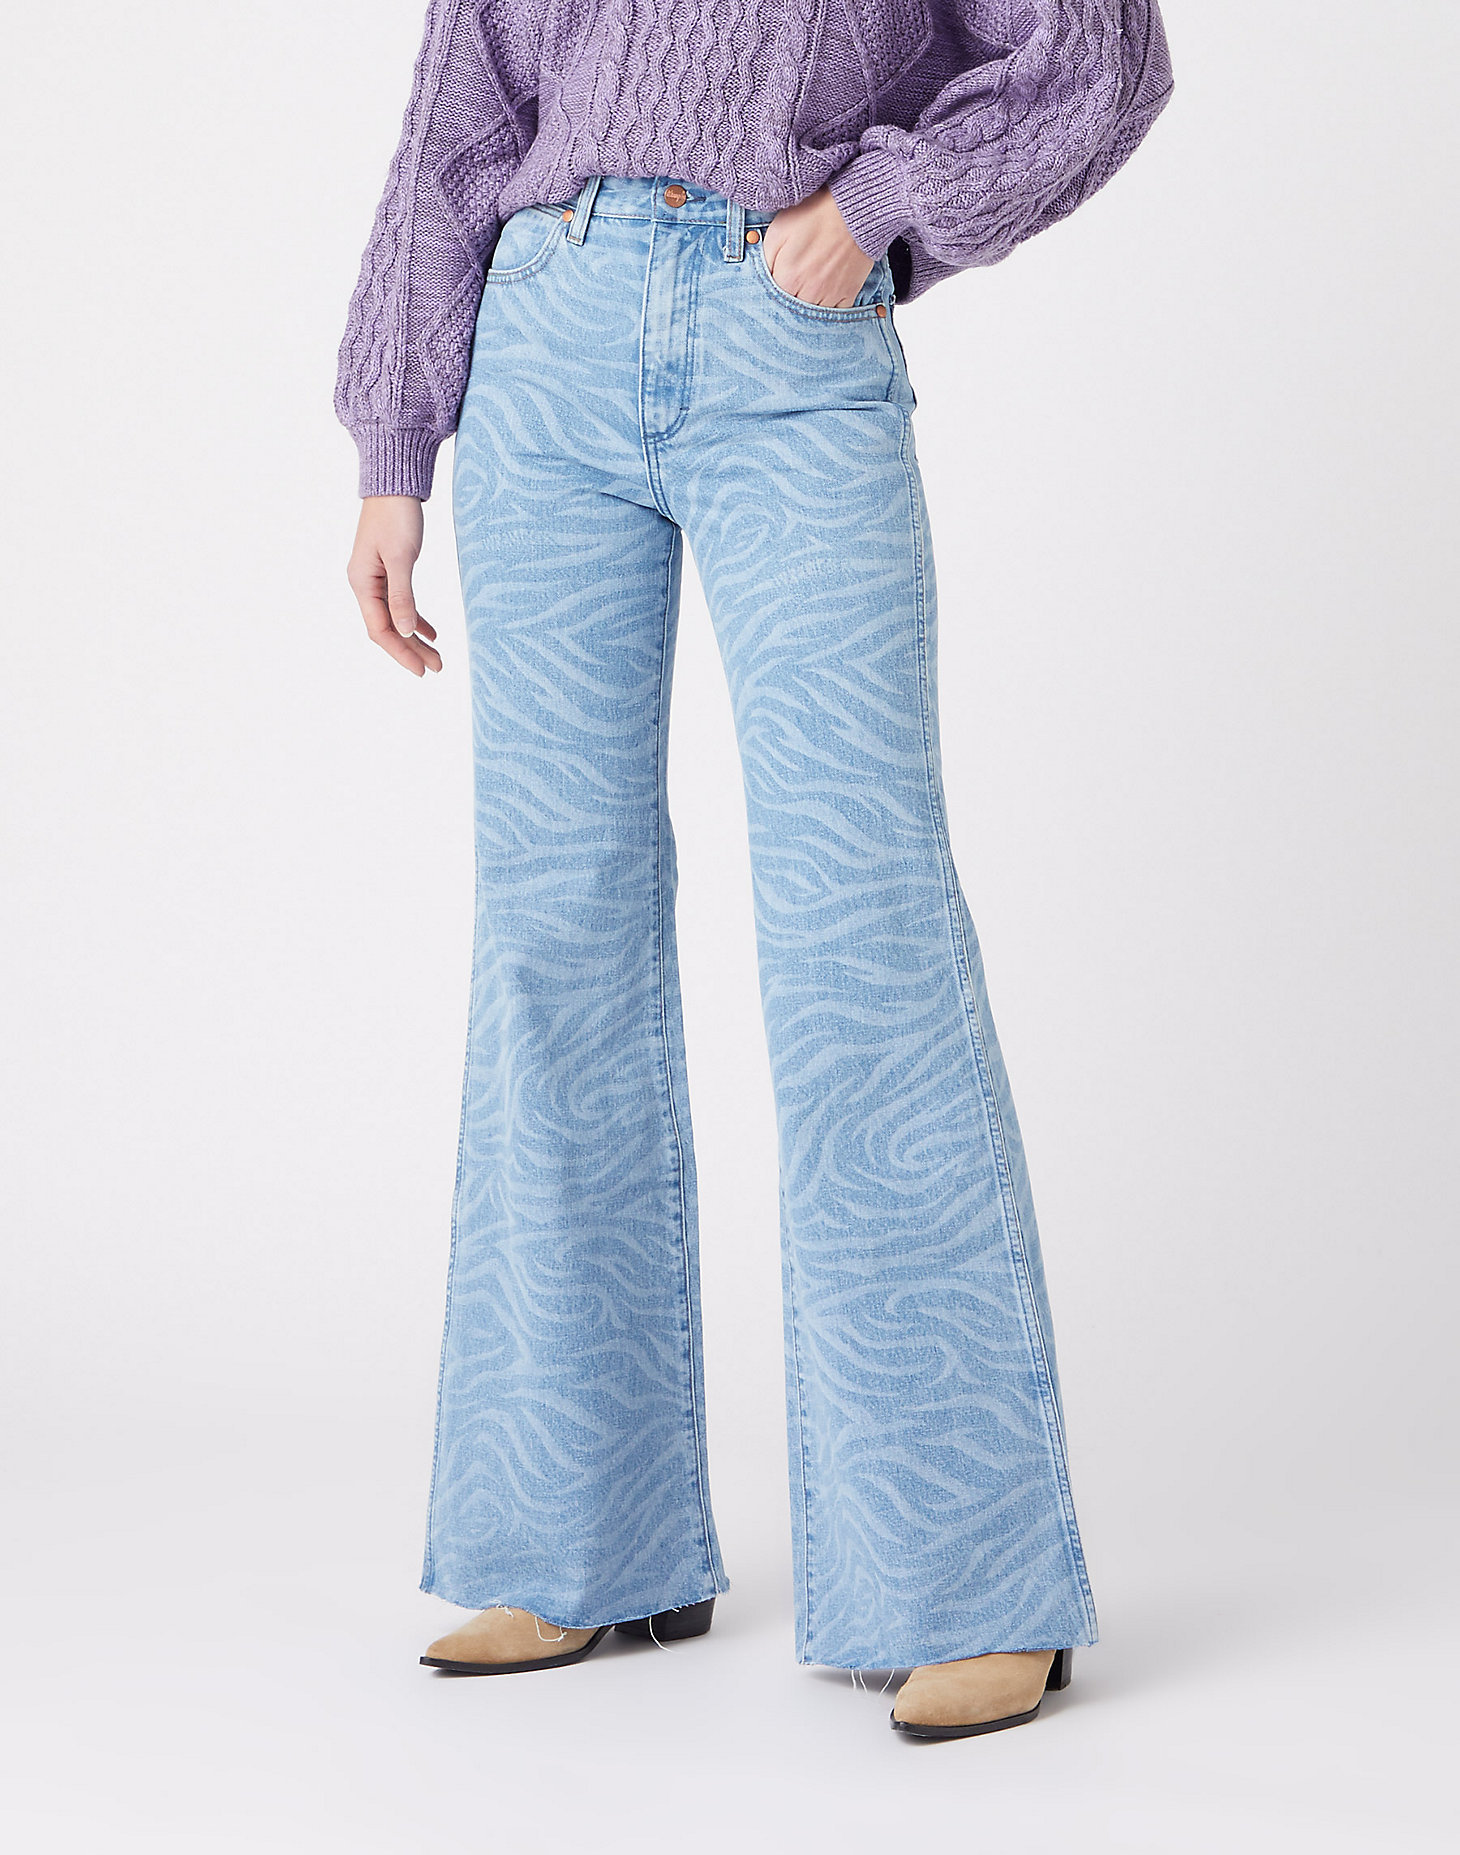 Zara slouchy jeans WOMEN FASHION Jeans Slouchy jeans NO STYLE Blue 38                  EU discount 60% 